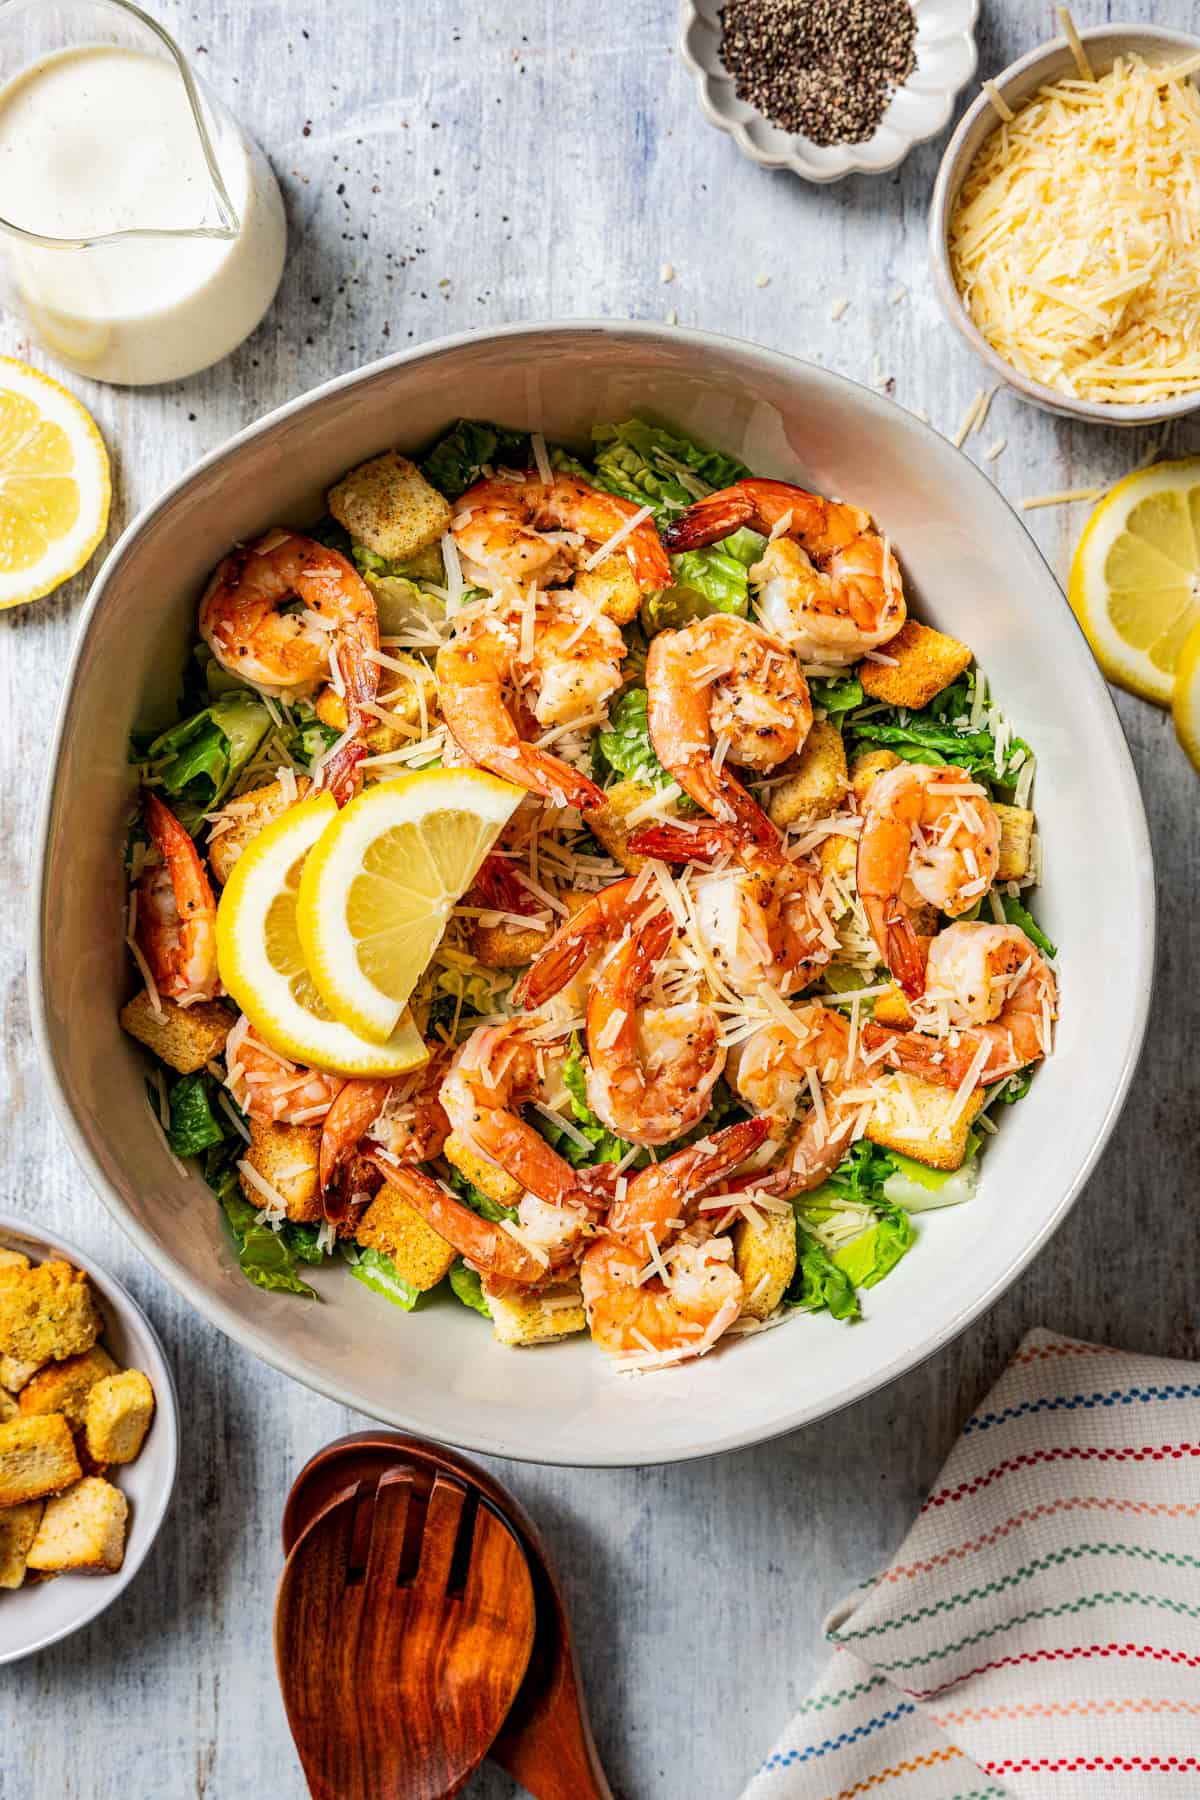 Shrimp Caesar salad in a large bowl garnished with lemon wedges, surrounded by salad ingredients.